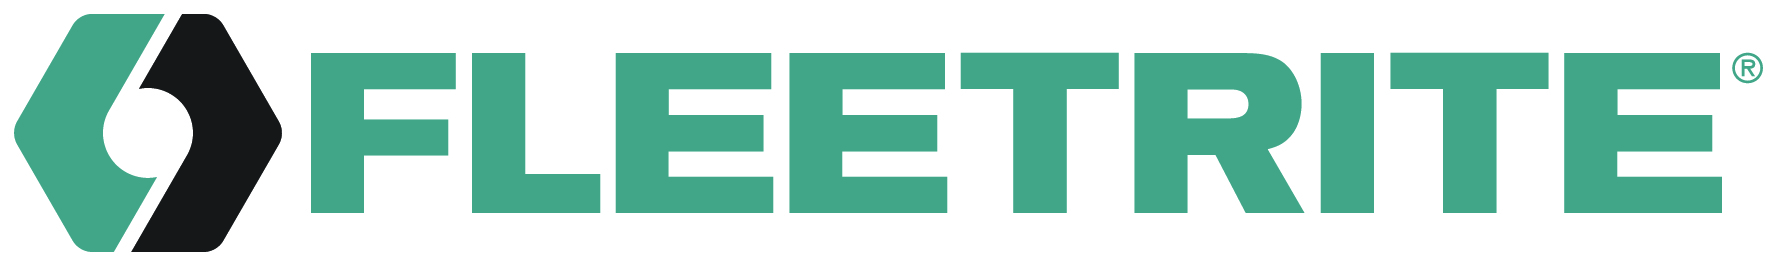 FLEETRITE logo JPG-CMYK